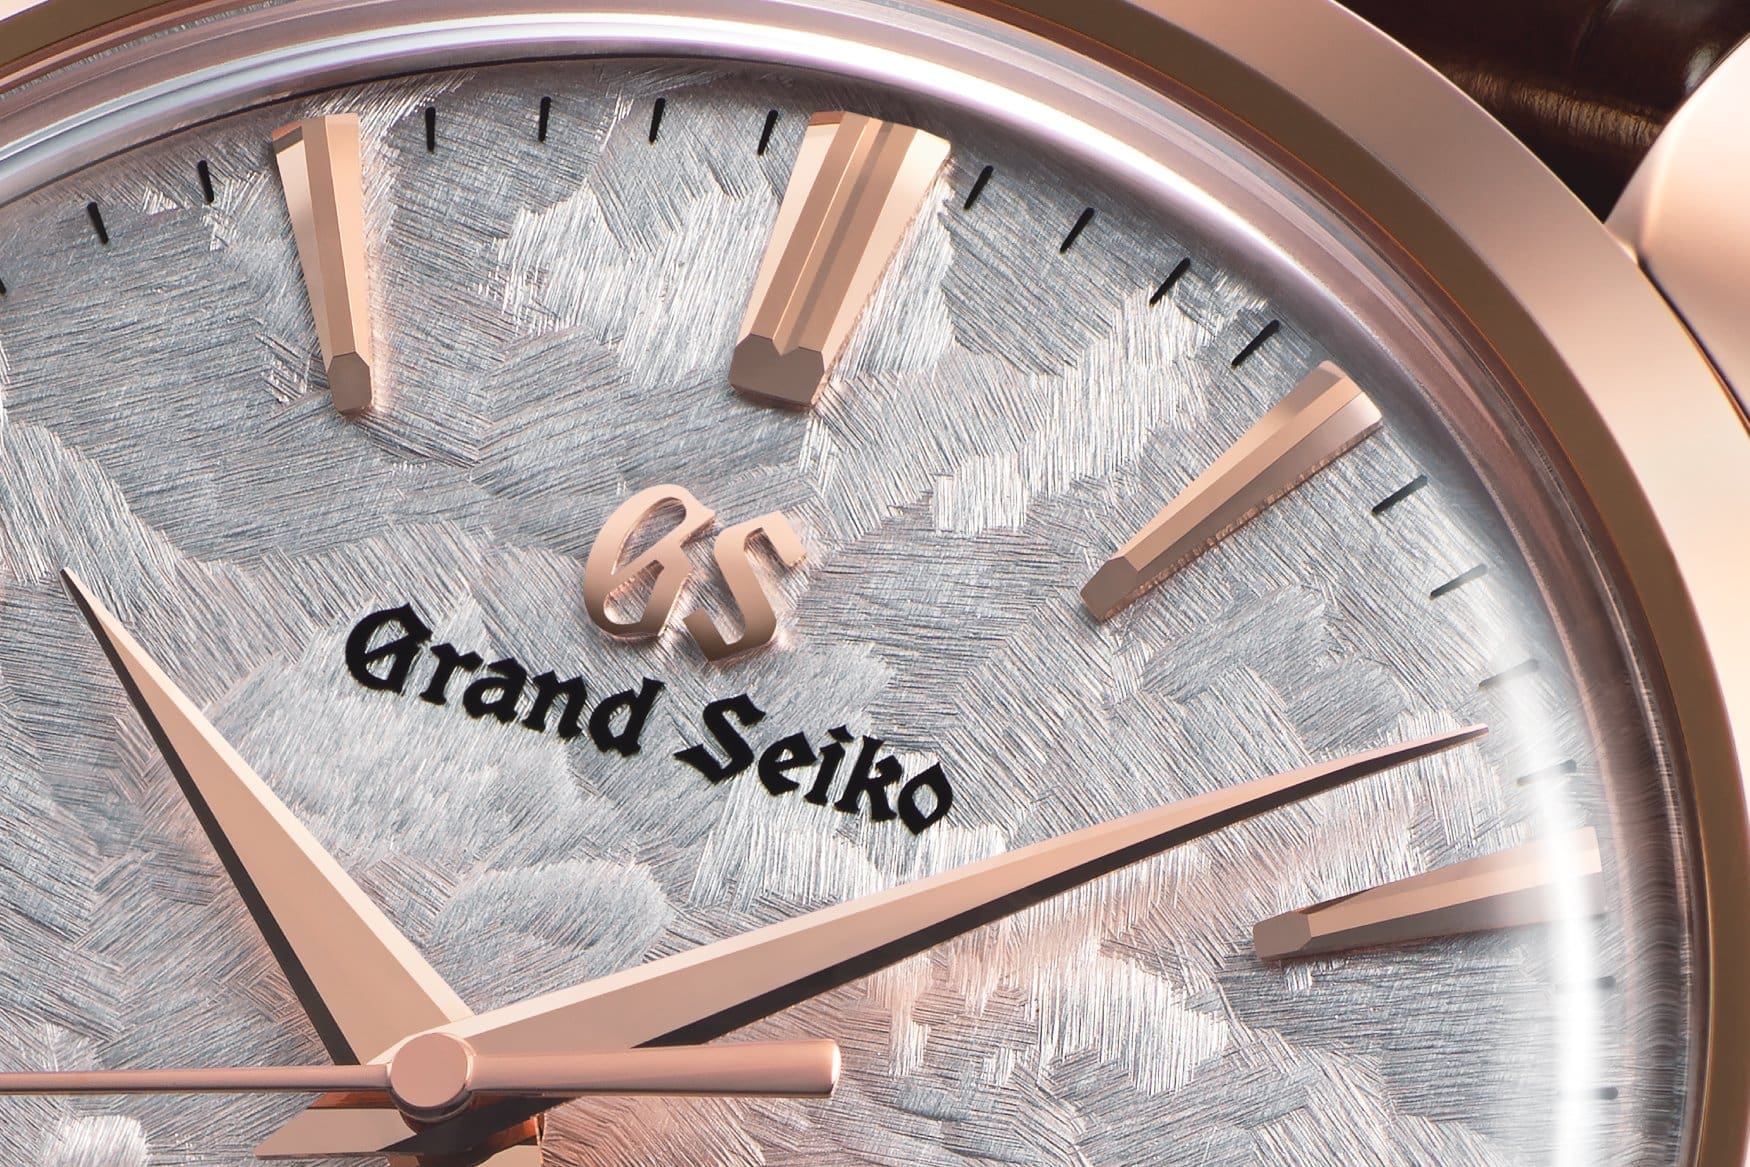 Understanding Grand Seiko design at a deeper level with GS designer Akira Yoshida